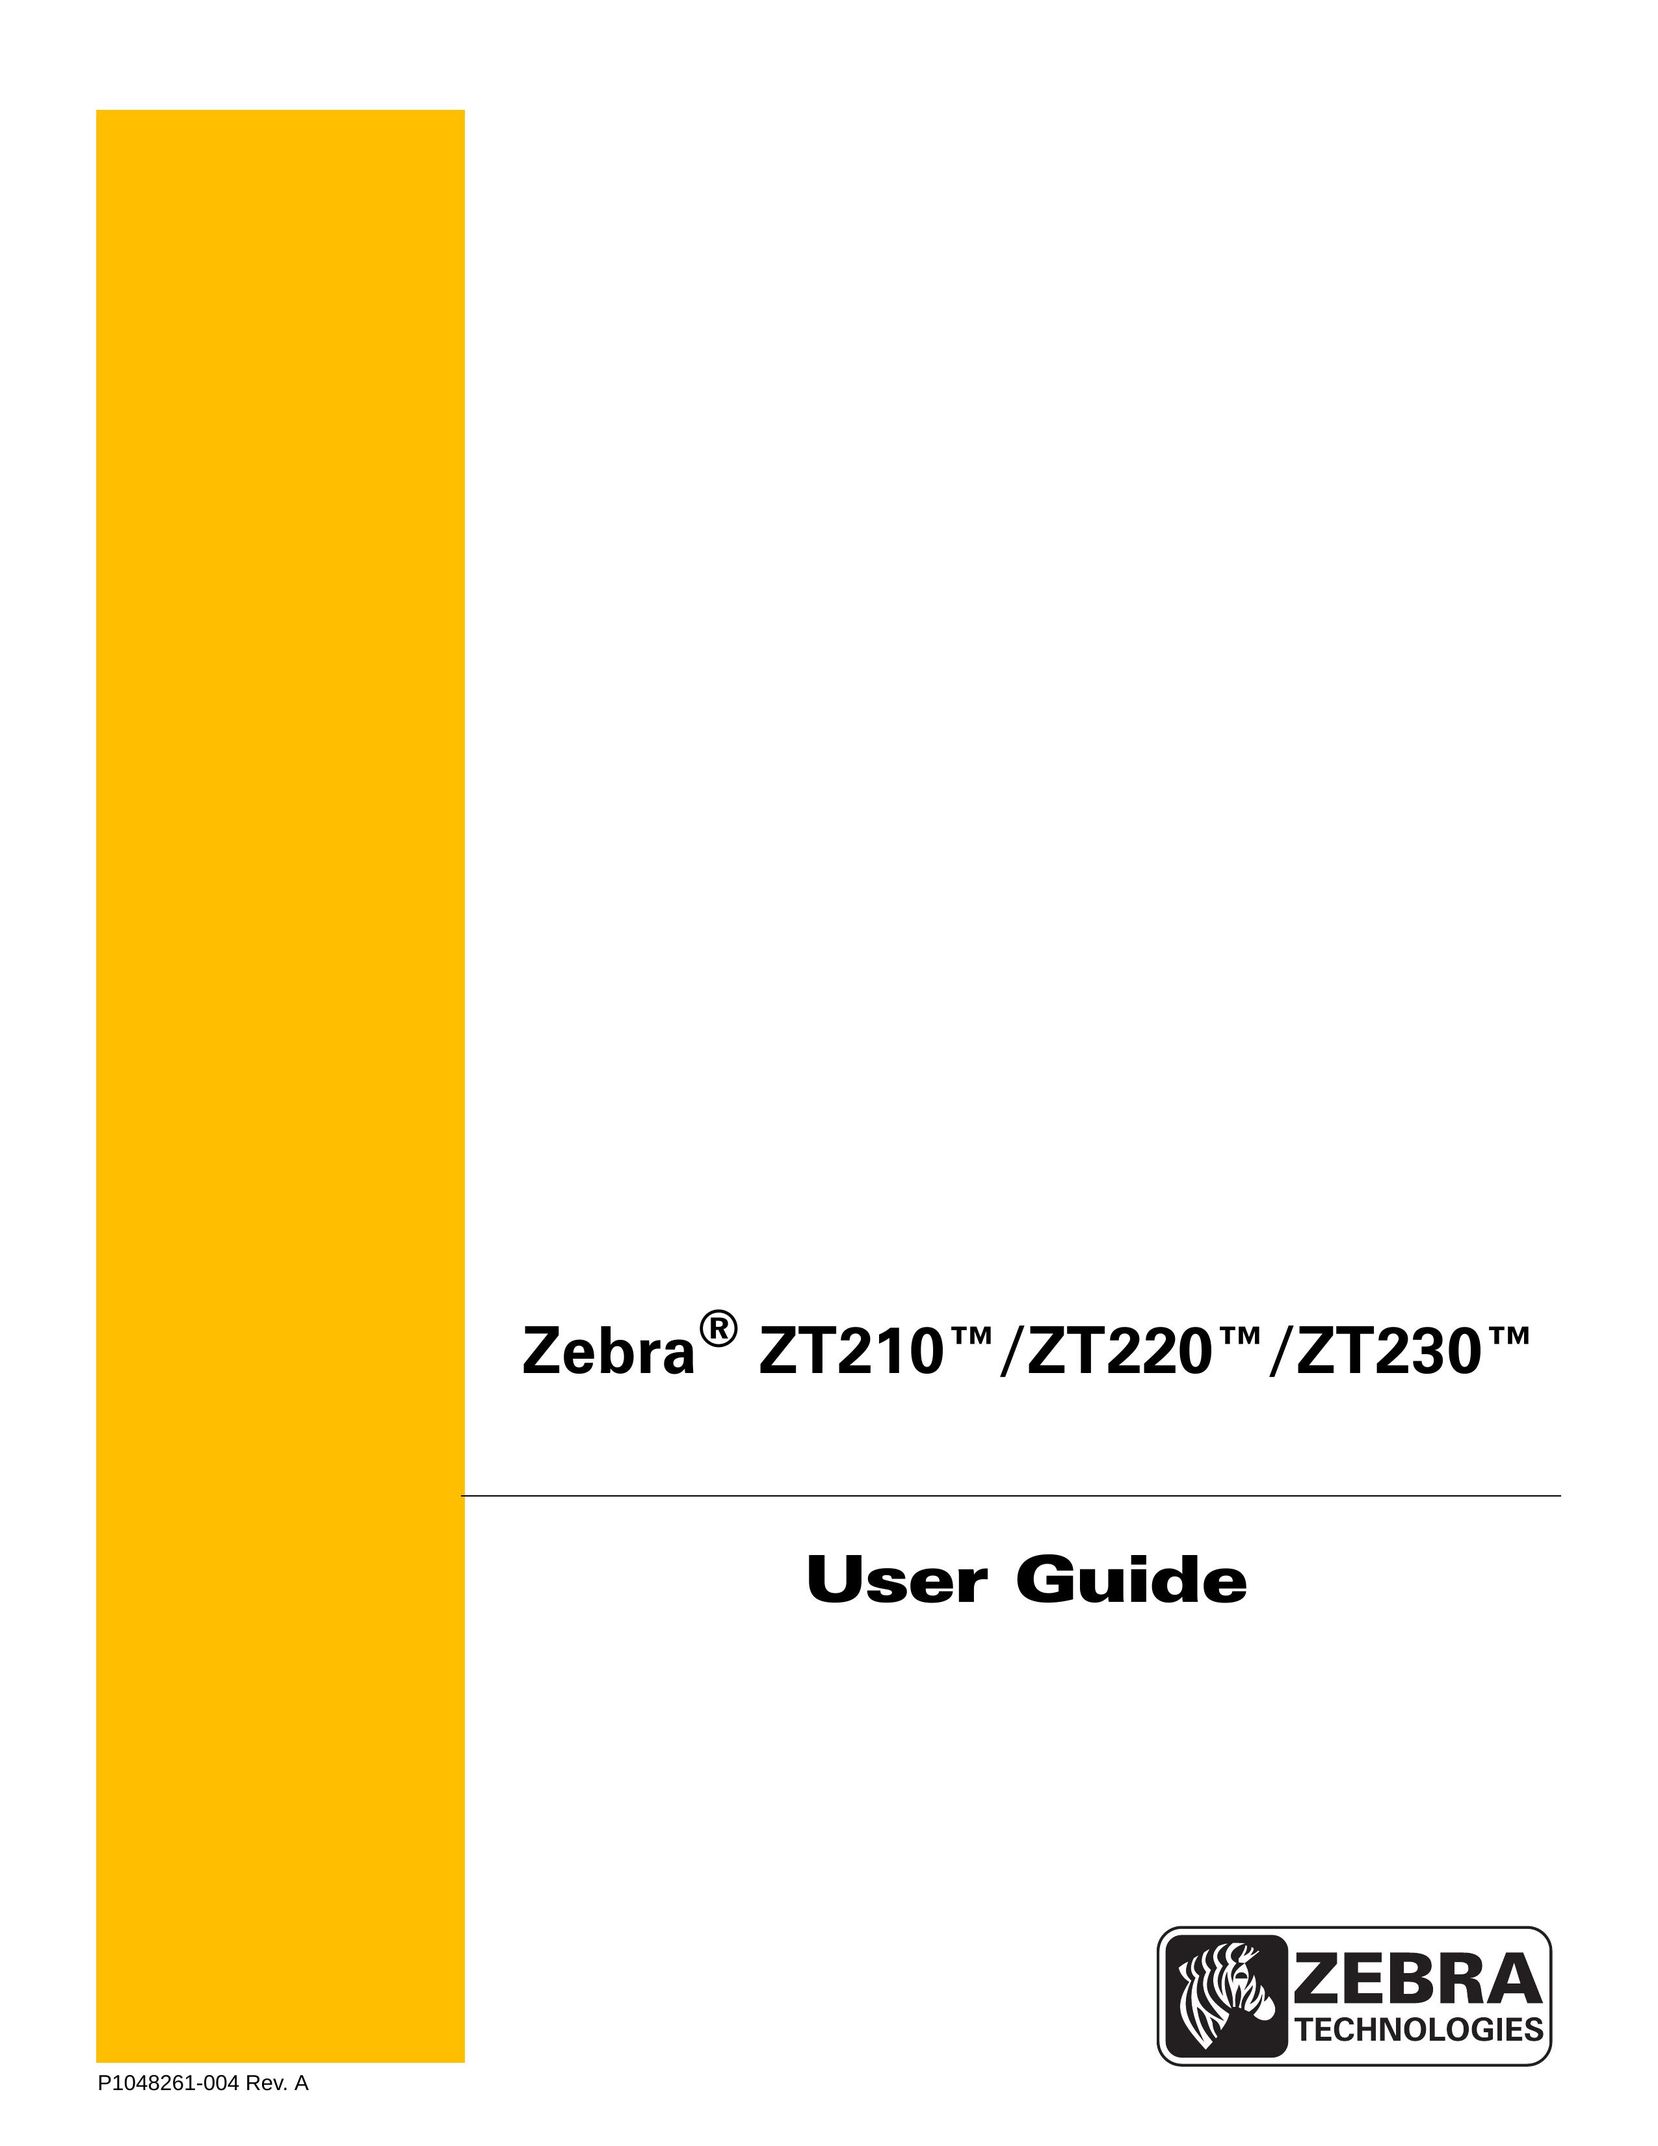 Zebra Technologies ZT220 Label Maker User Manual